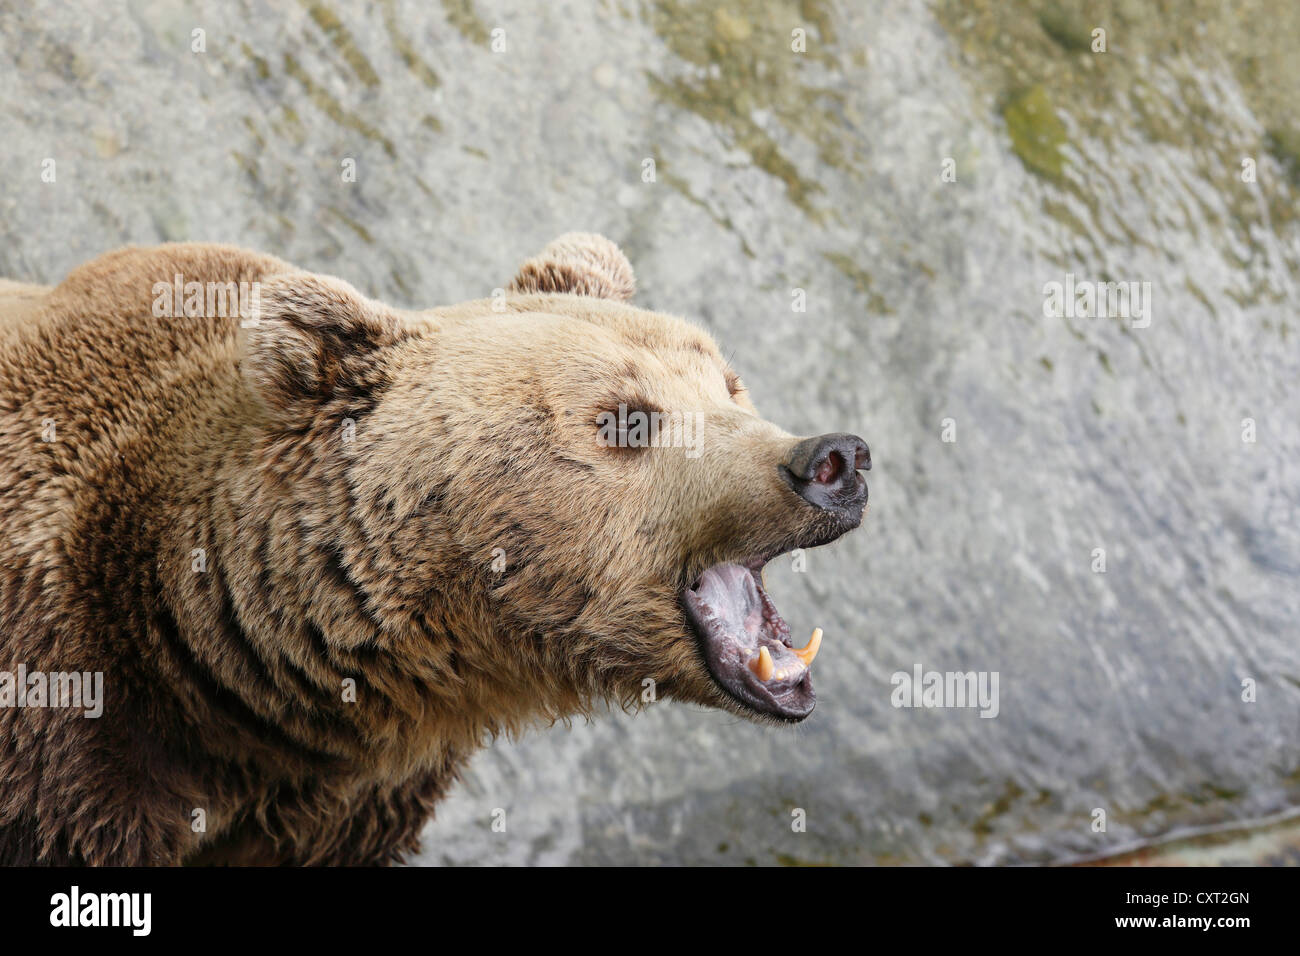 Brown bear (Ursus arctos), Cumberland Deer Park Gruenau, Salzkammergut region, Upper Austria, Austria, Europe Stock Photo